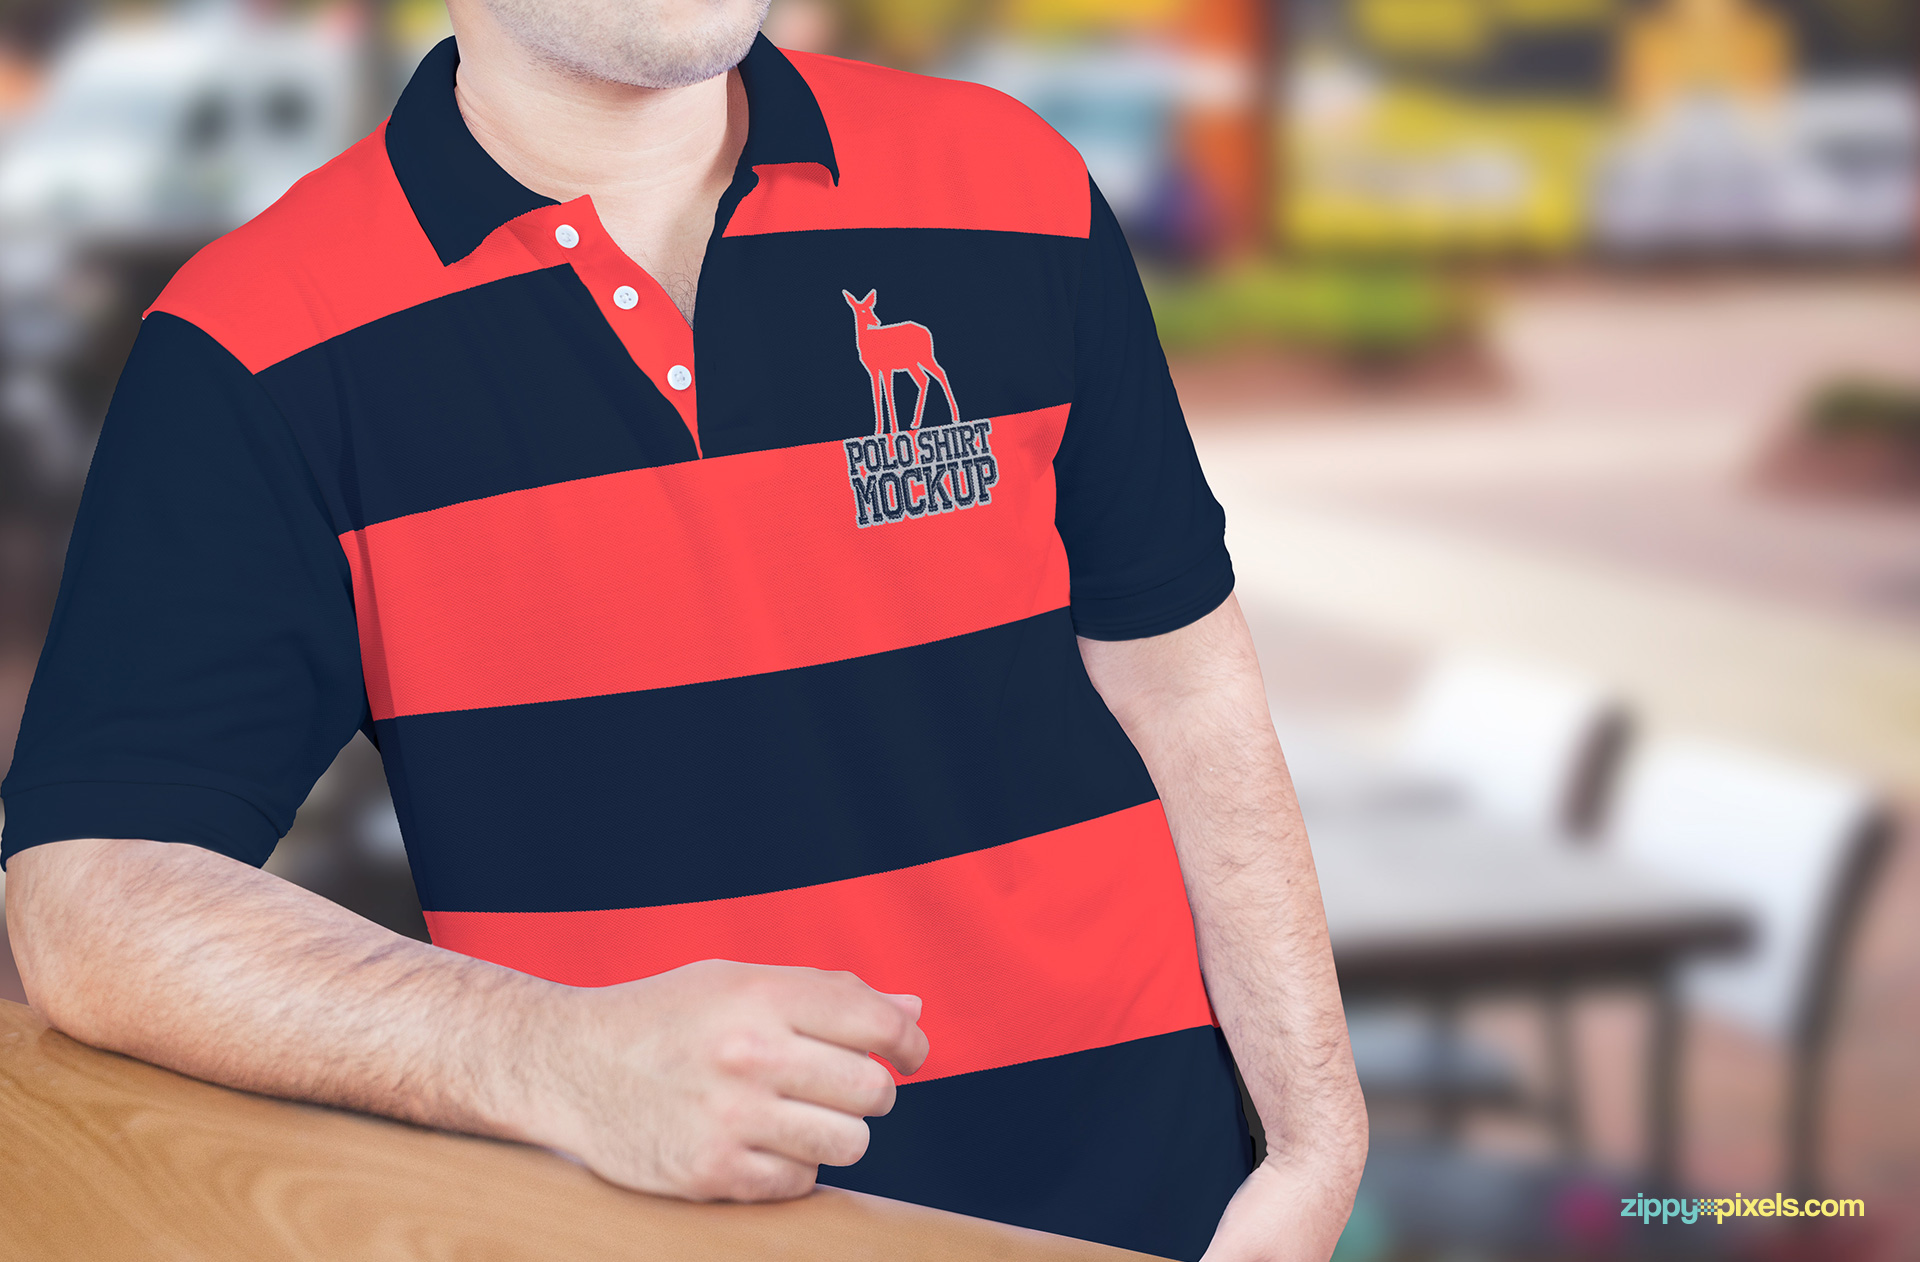 Free polo shirt mockup PSD to enhance your custom design creativity